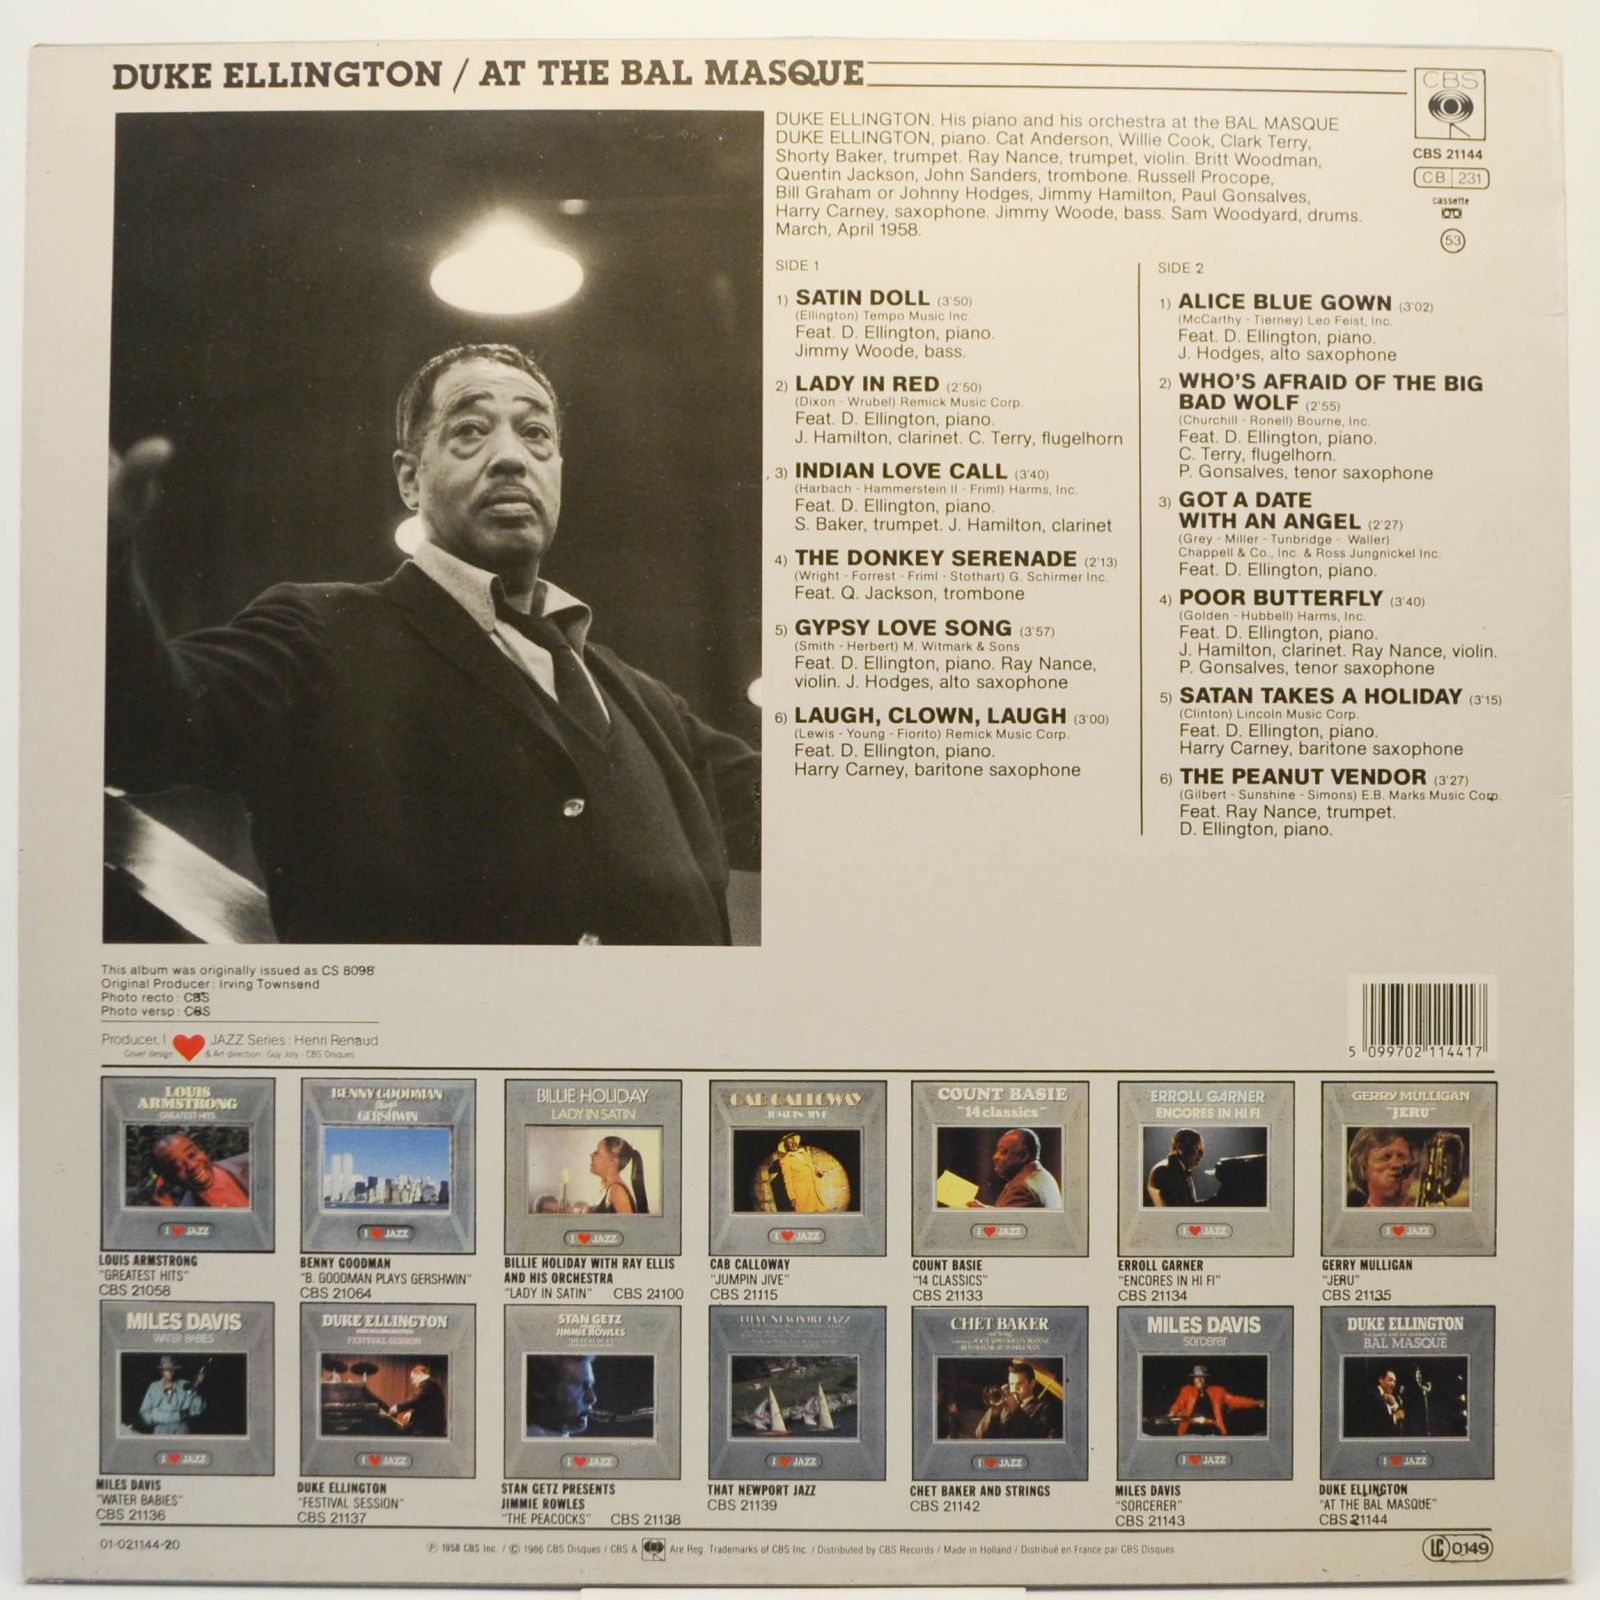 Duke Ellington — Duke Ellington His Piano And His Orchestra At The Bal Masque, 1986